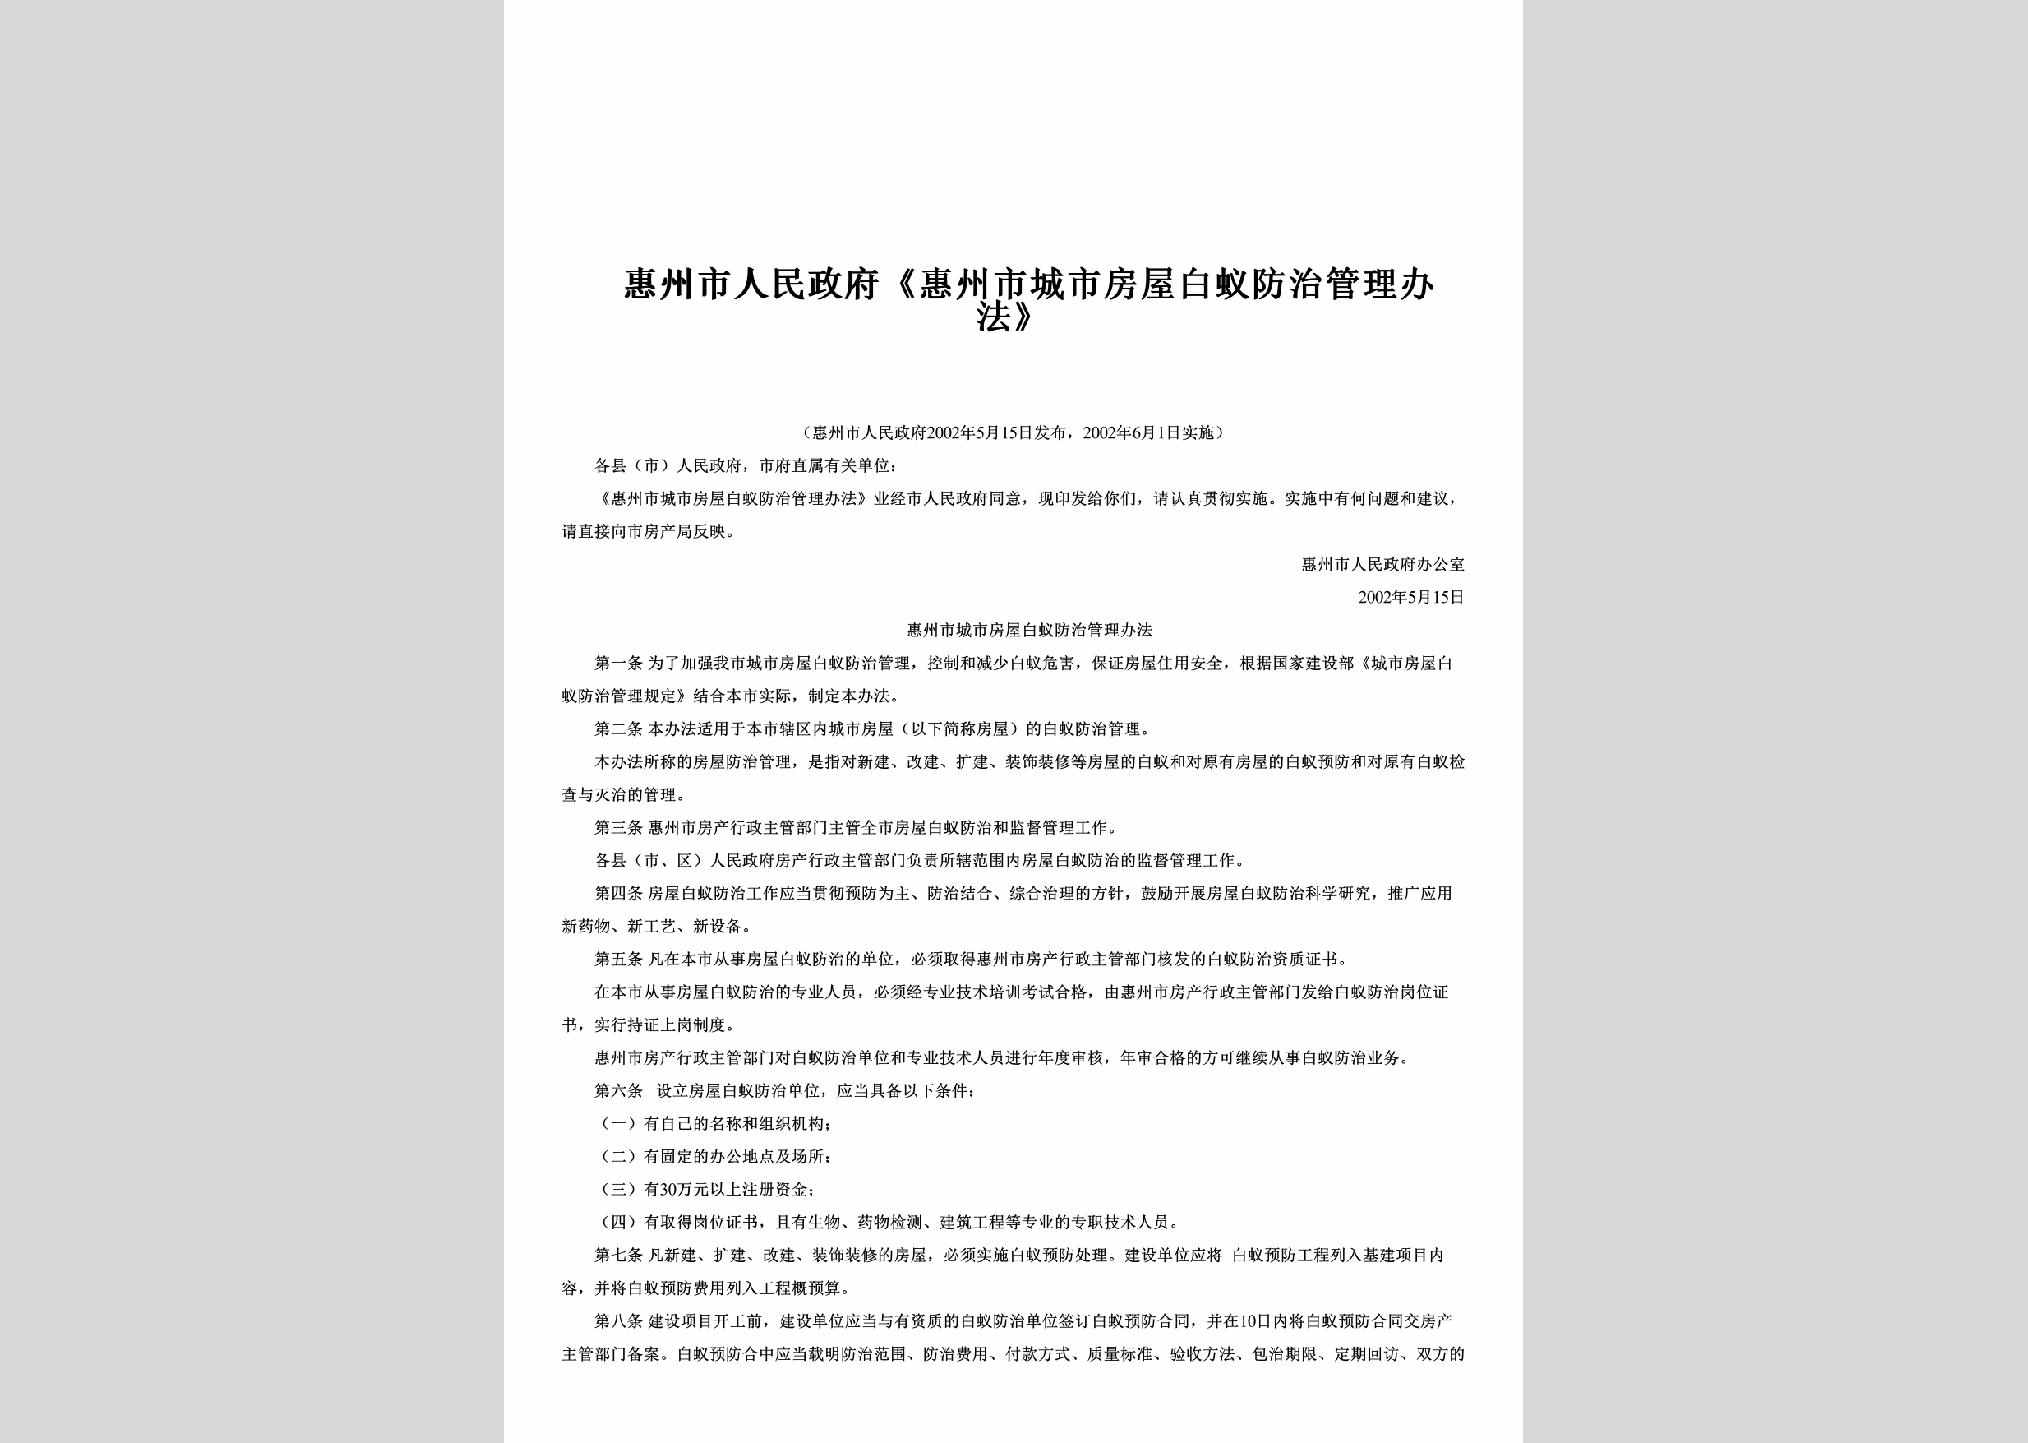 GD-FWBYFZBF-2002：《惠州市城市房屋白蚁防治管理办法》